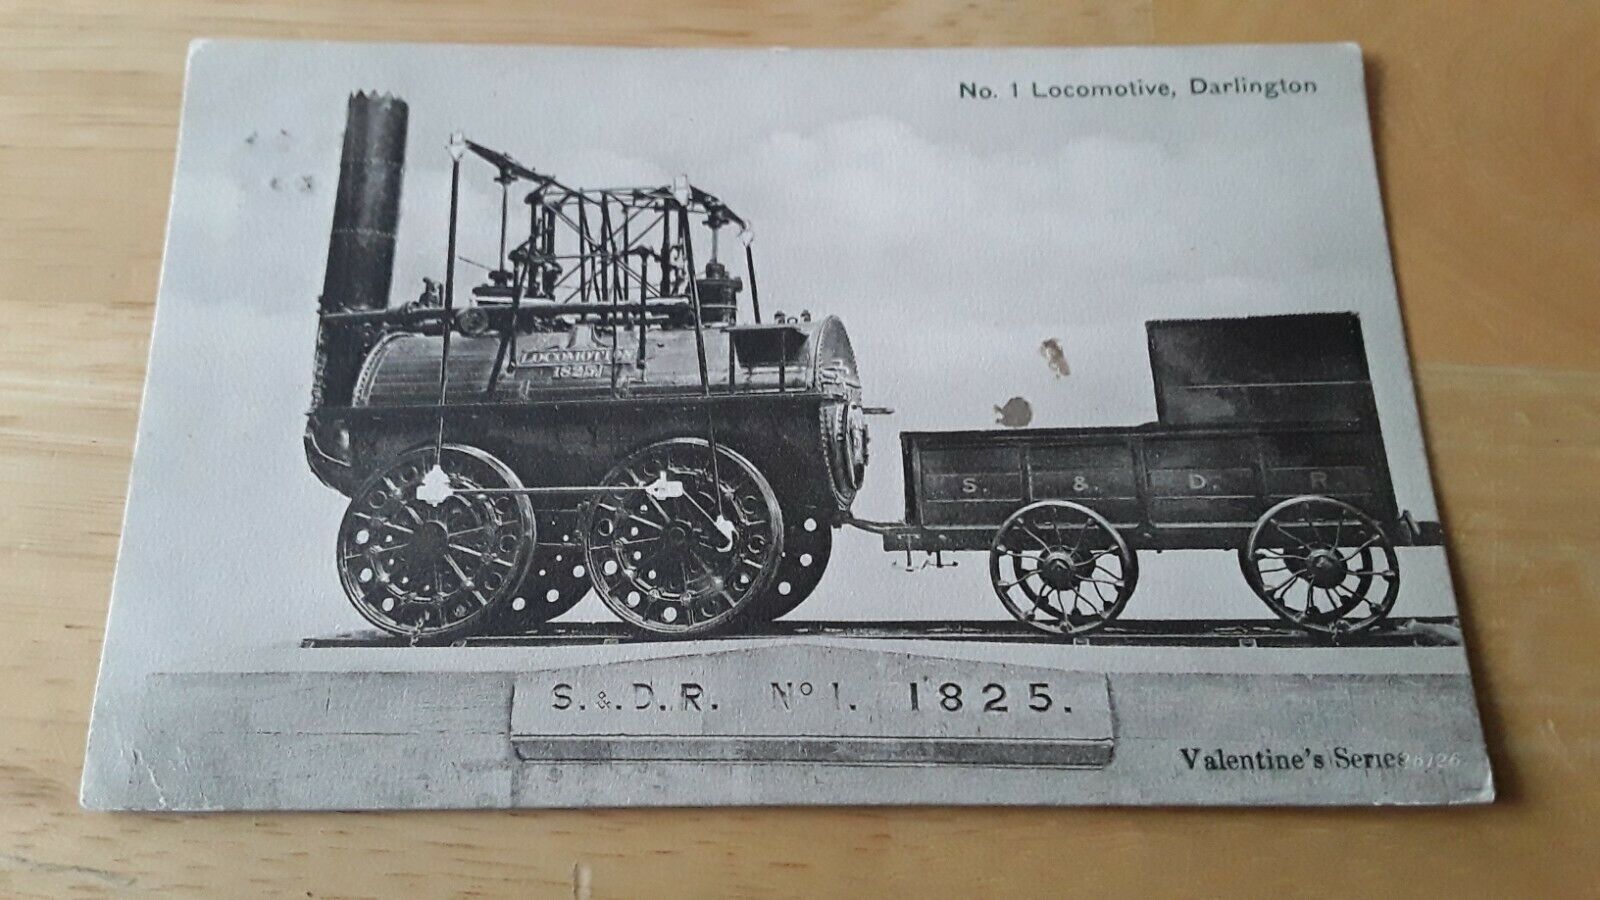 House Clearance - Train No.1 Locomotive Engine Darlington 1825, Valentines  Darlington  PM 1905